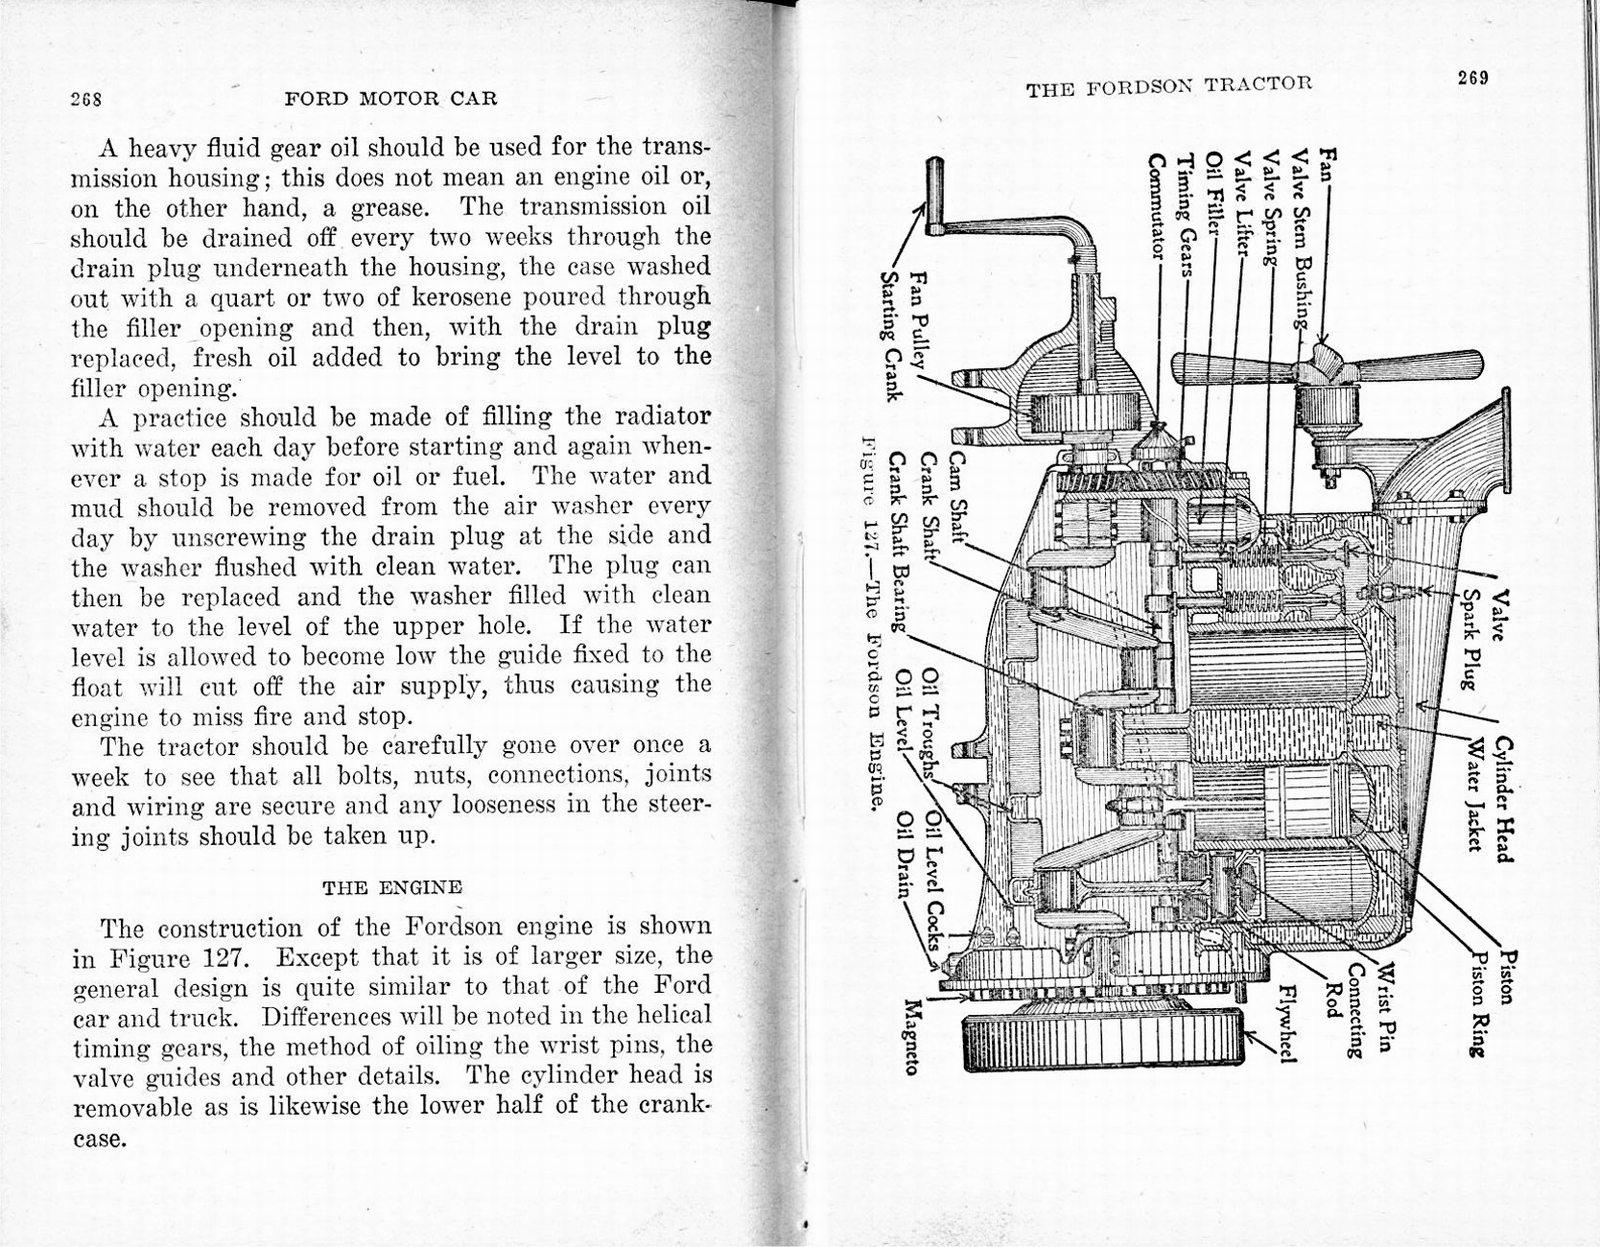 n_1917 Ford Car & Truck Manual-268-269.jpg